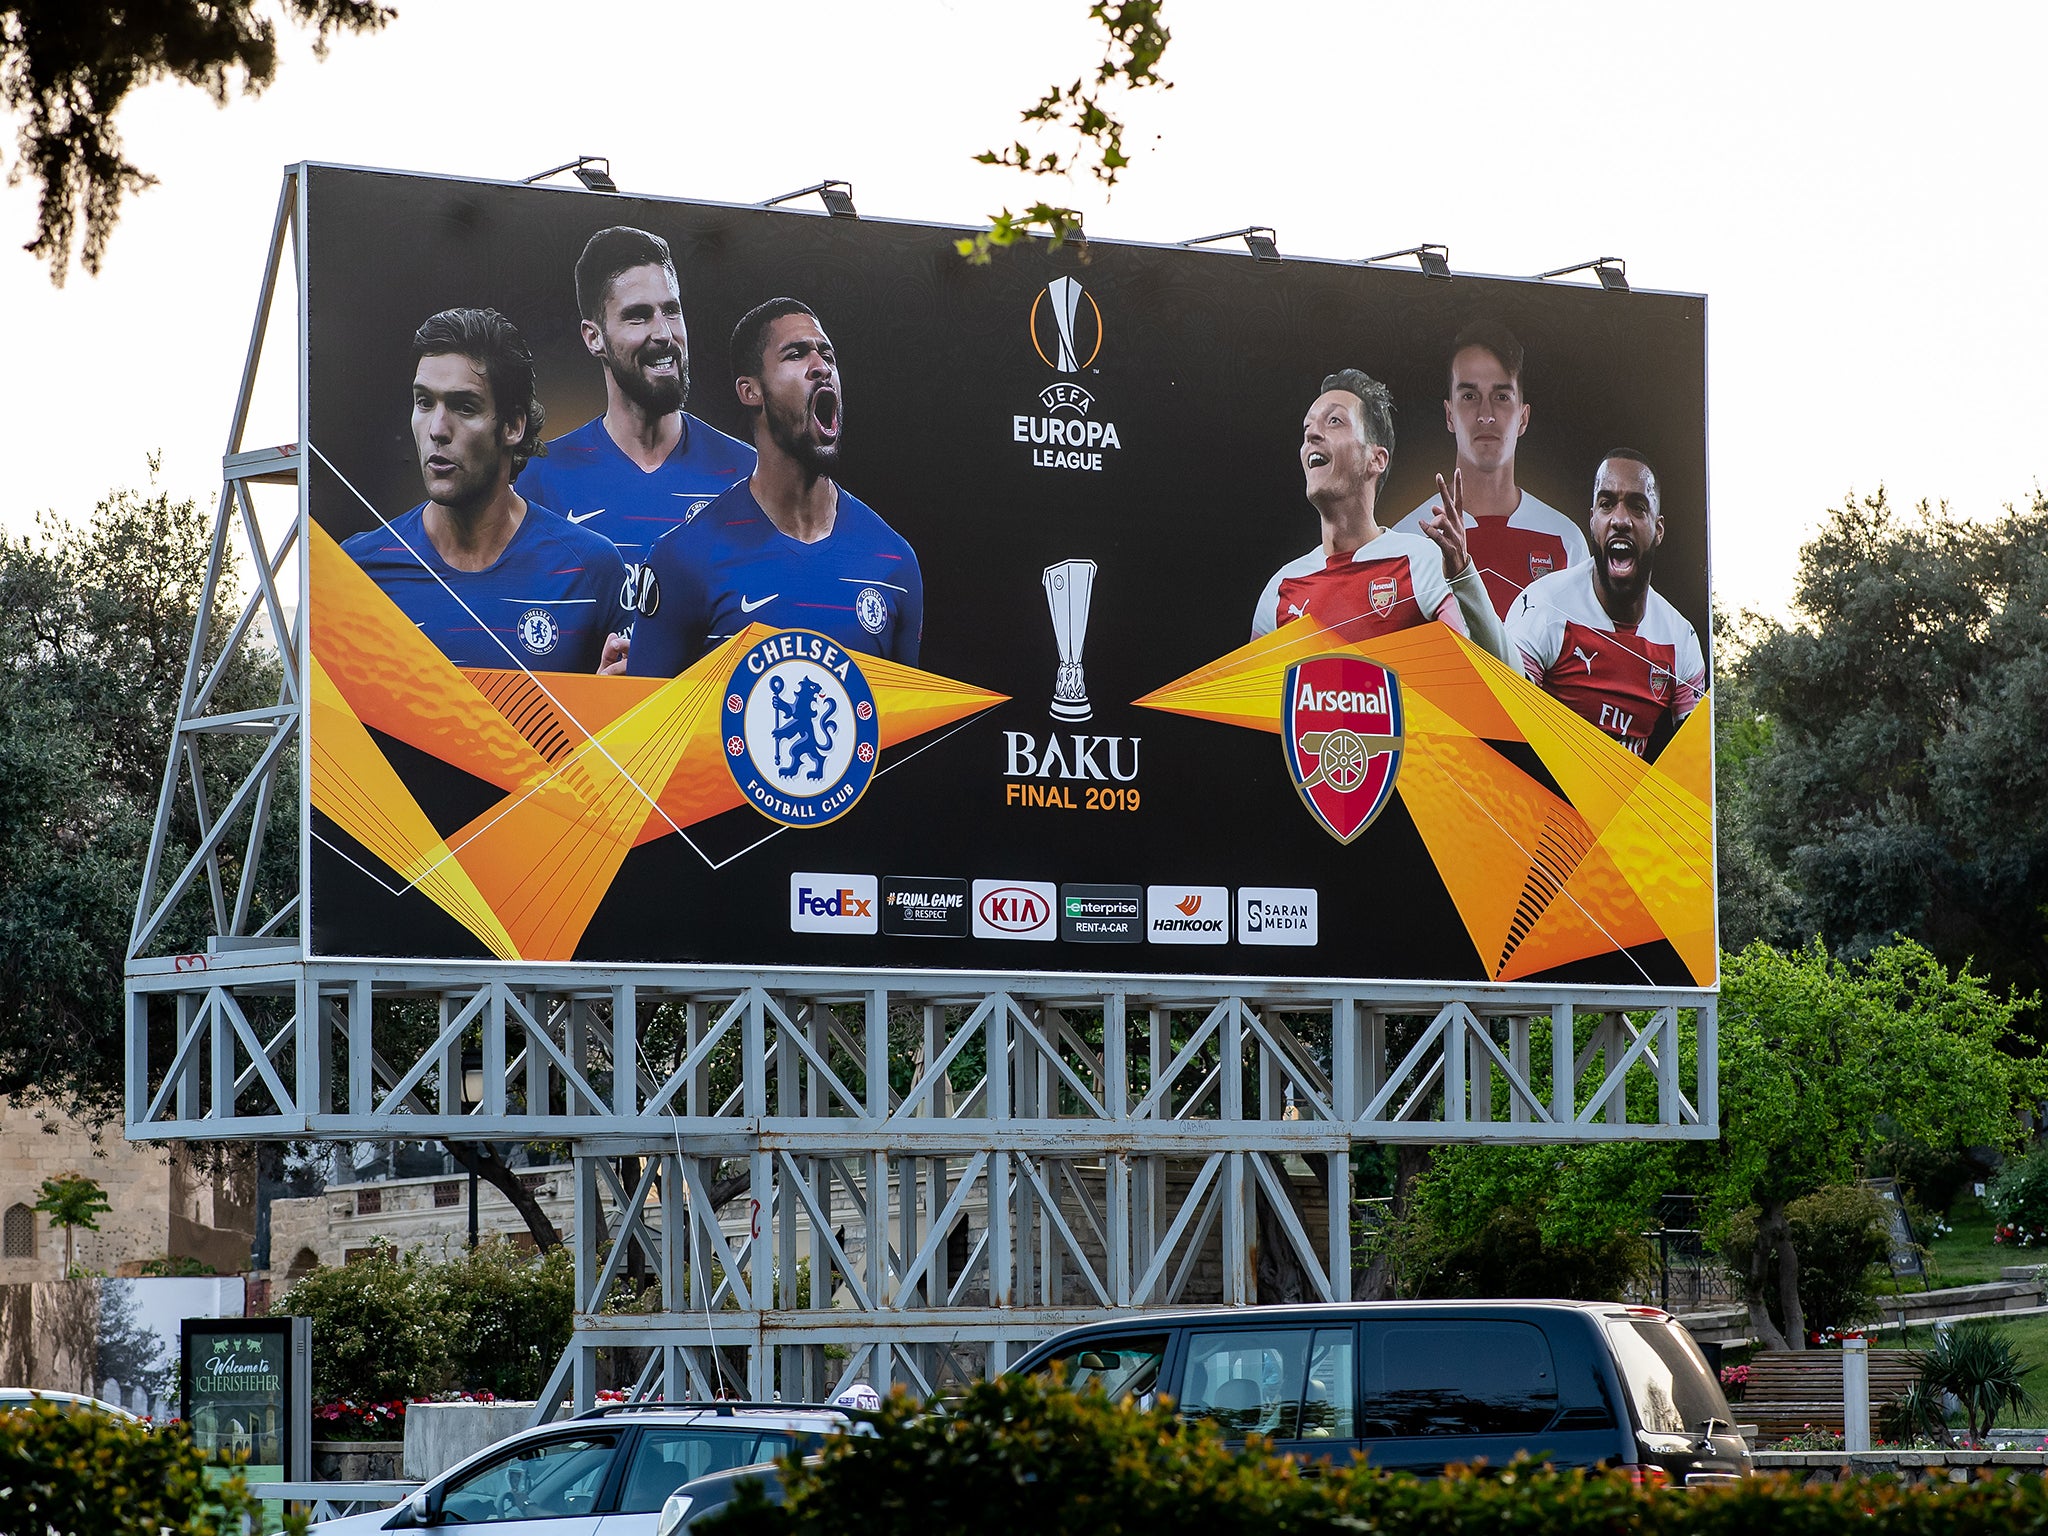 Arsenal and Chelsea meet in Baku